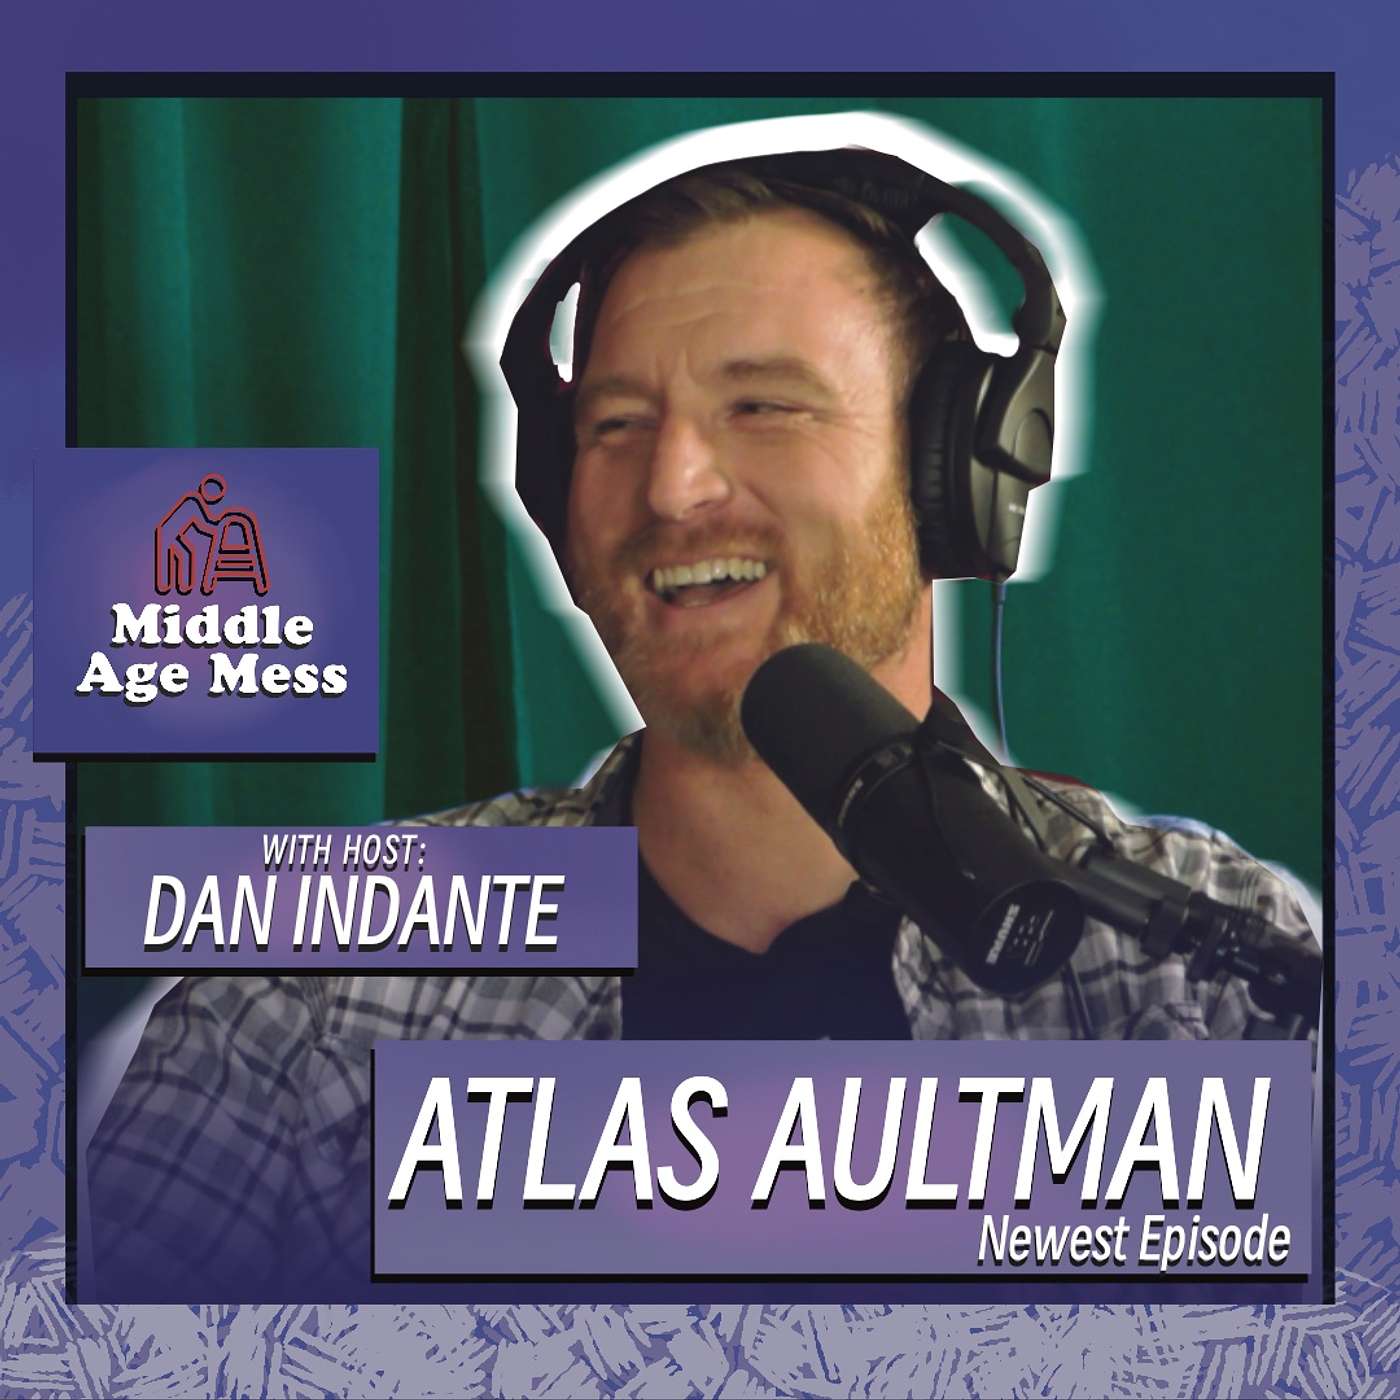 Middle Age Mess, Episode 11 - Atlas Aultman